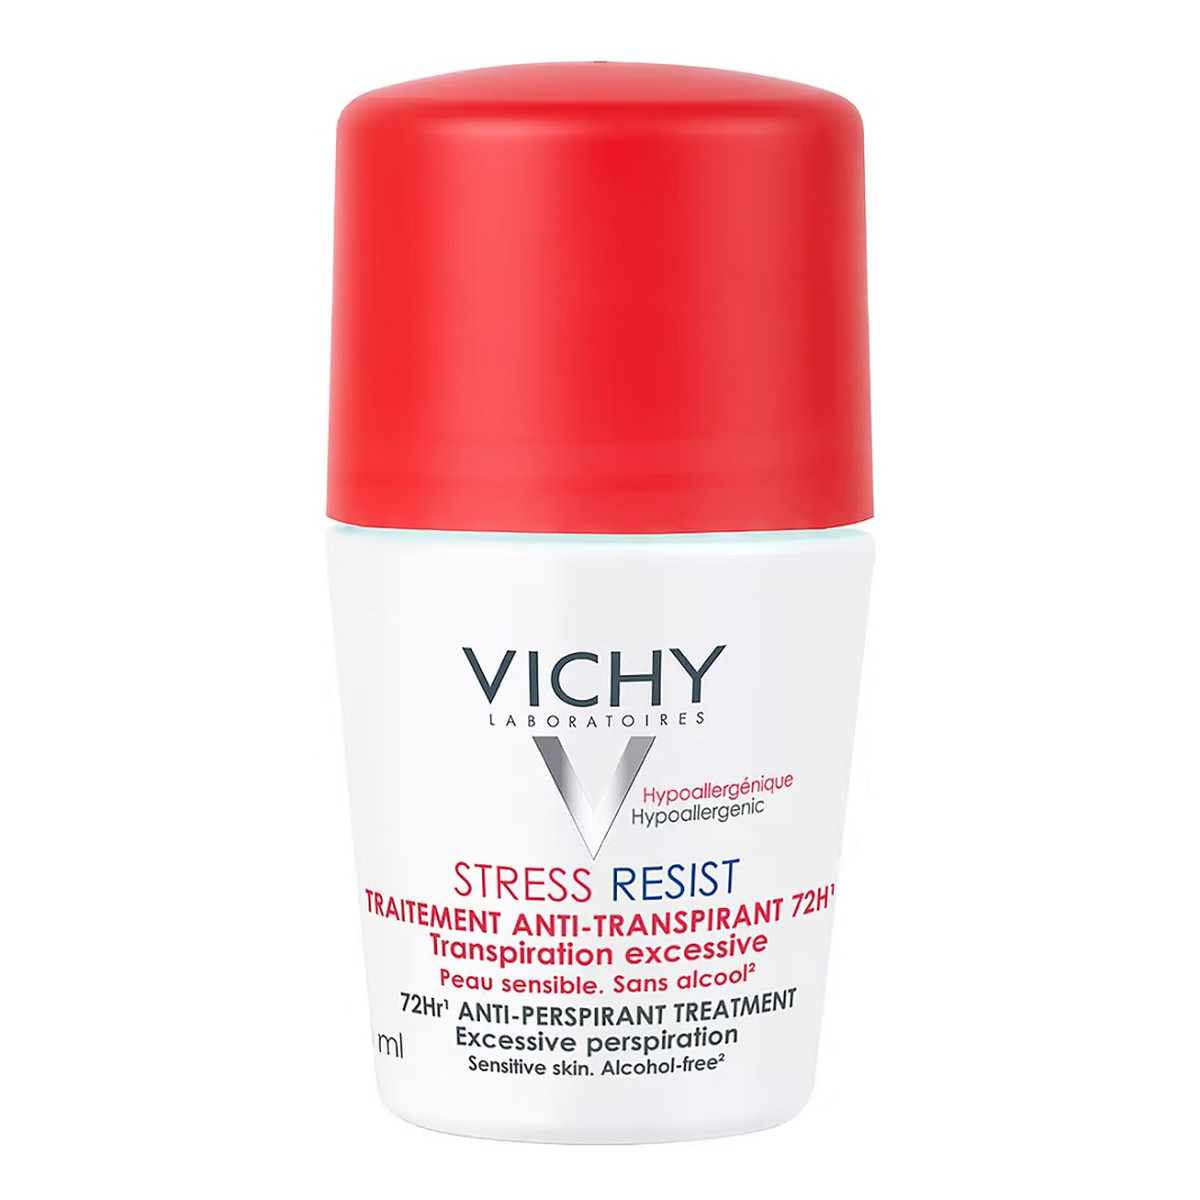 Vichy Stress resist intensywny antyperspirant w kulce 50ml